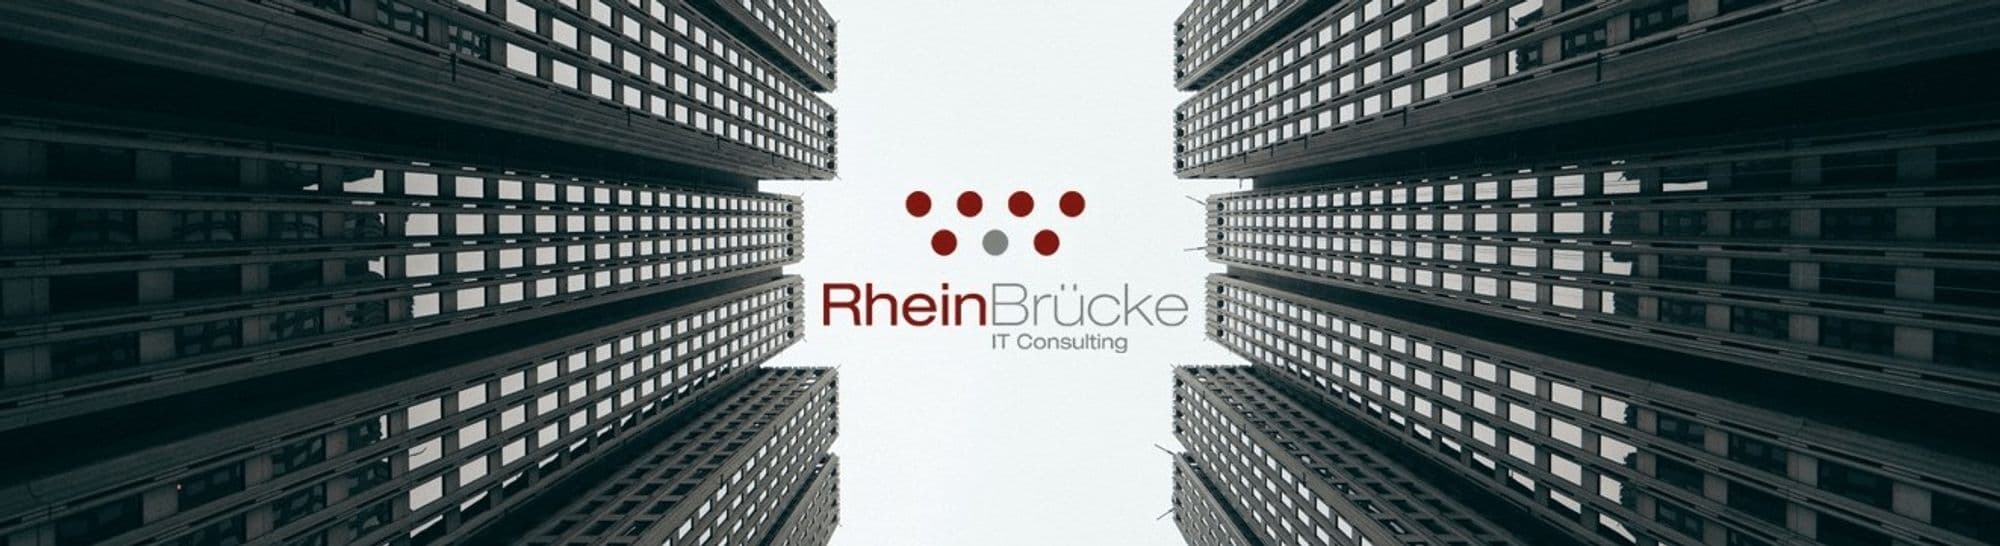 RheinBrücke IT Consulting Cover Image